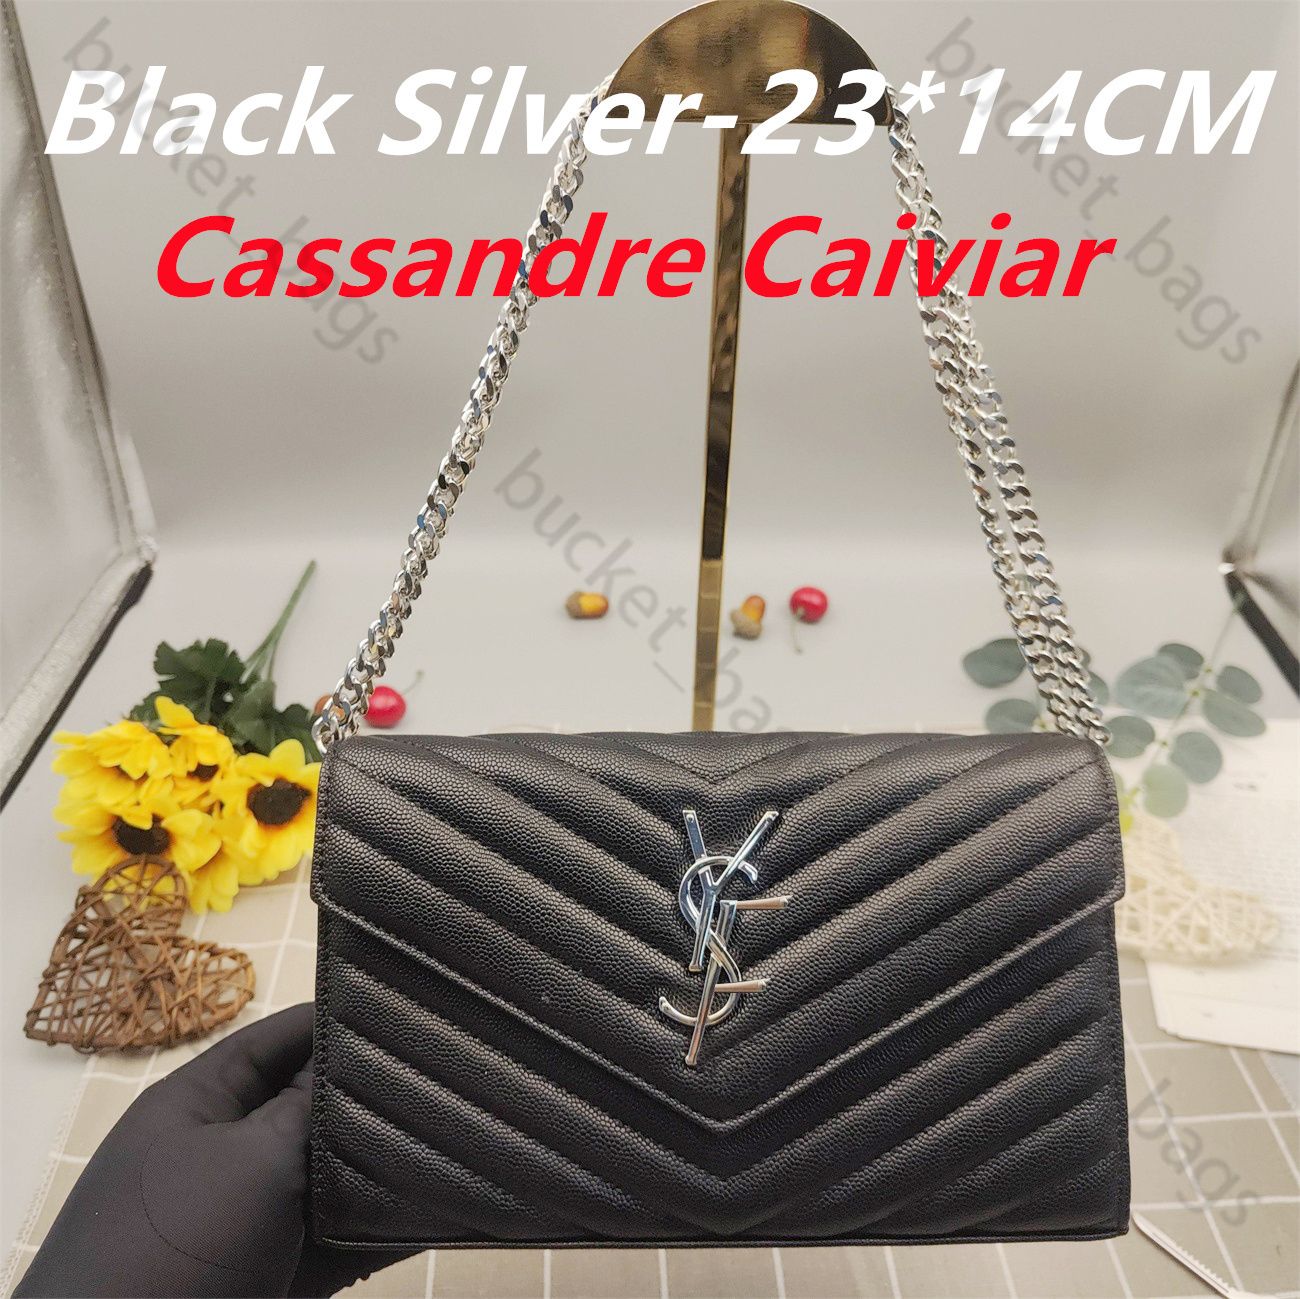 Caviar-Black Silver